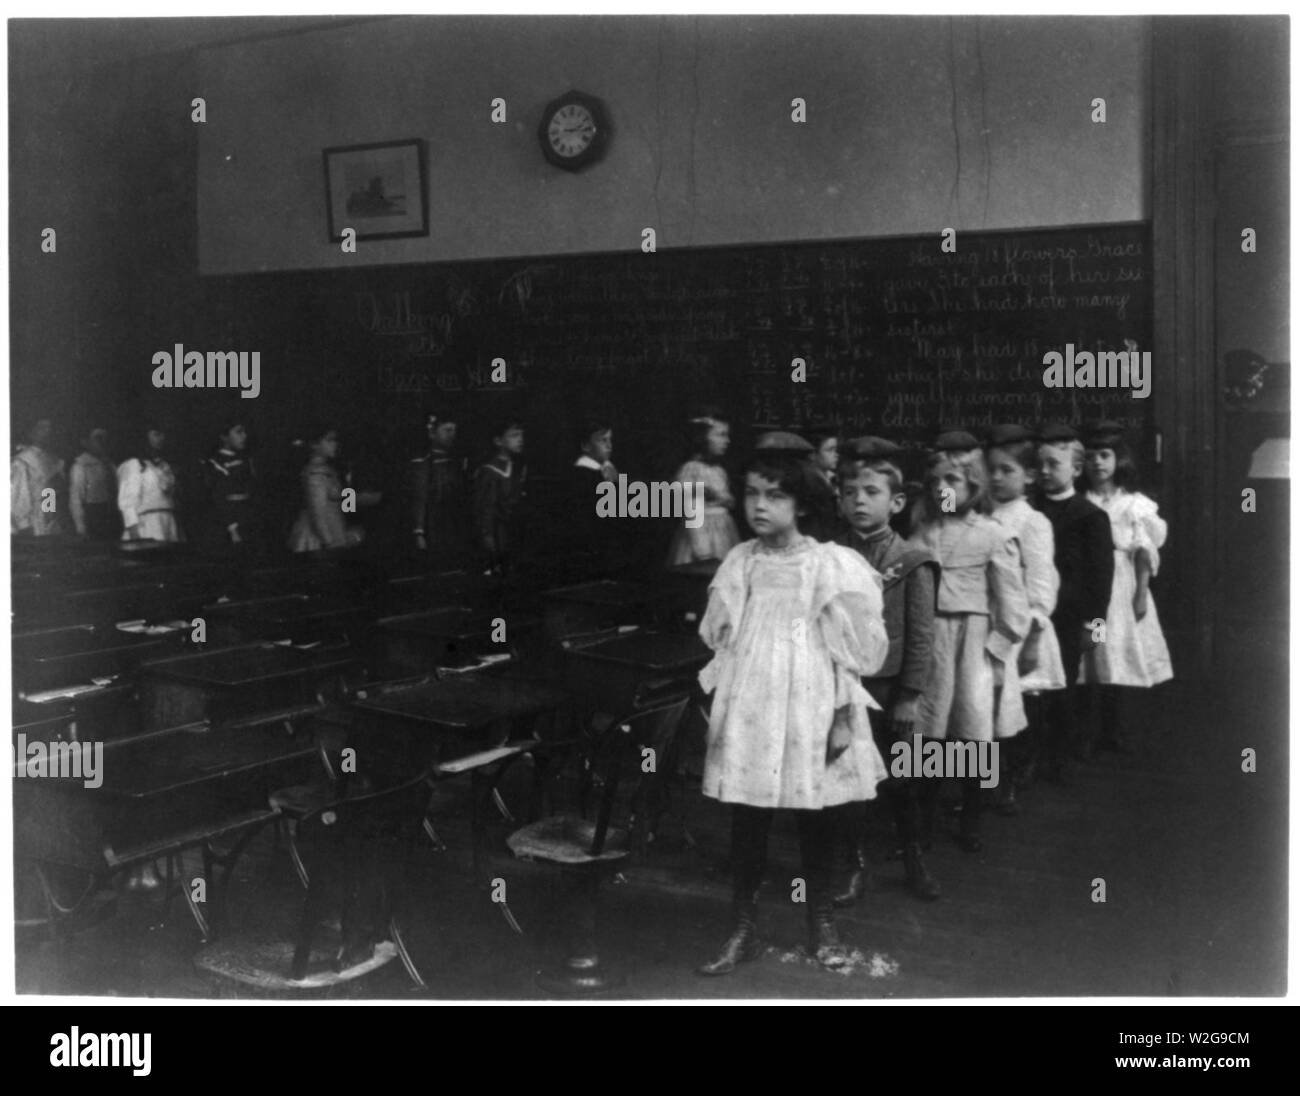 Children marching around the classroom, Washington, D.C Stock Photo - Alamy